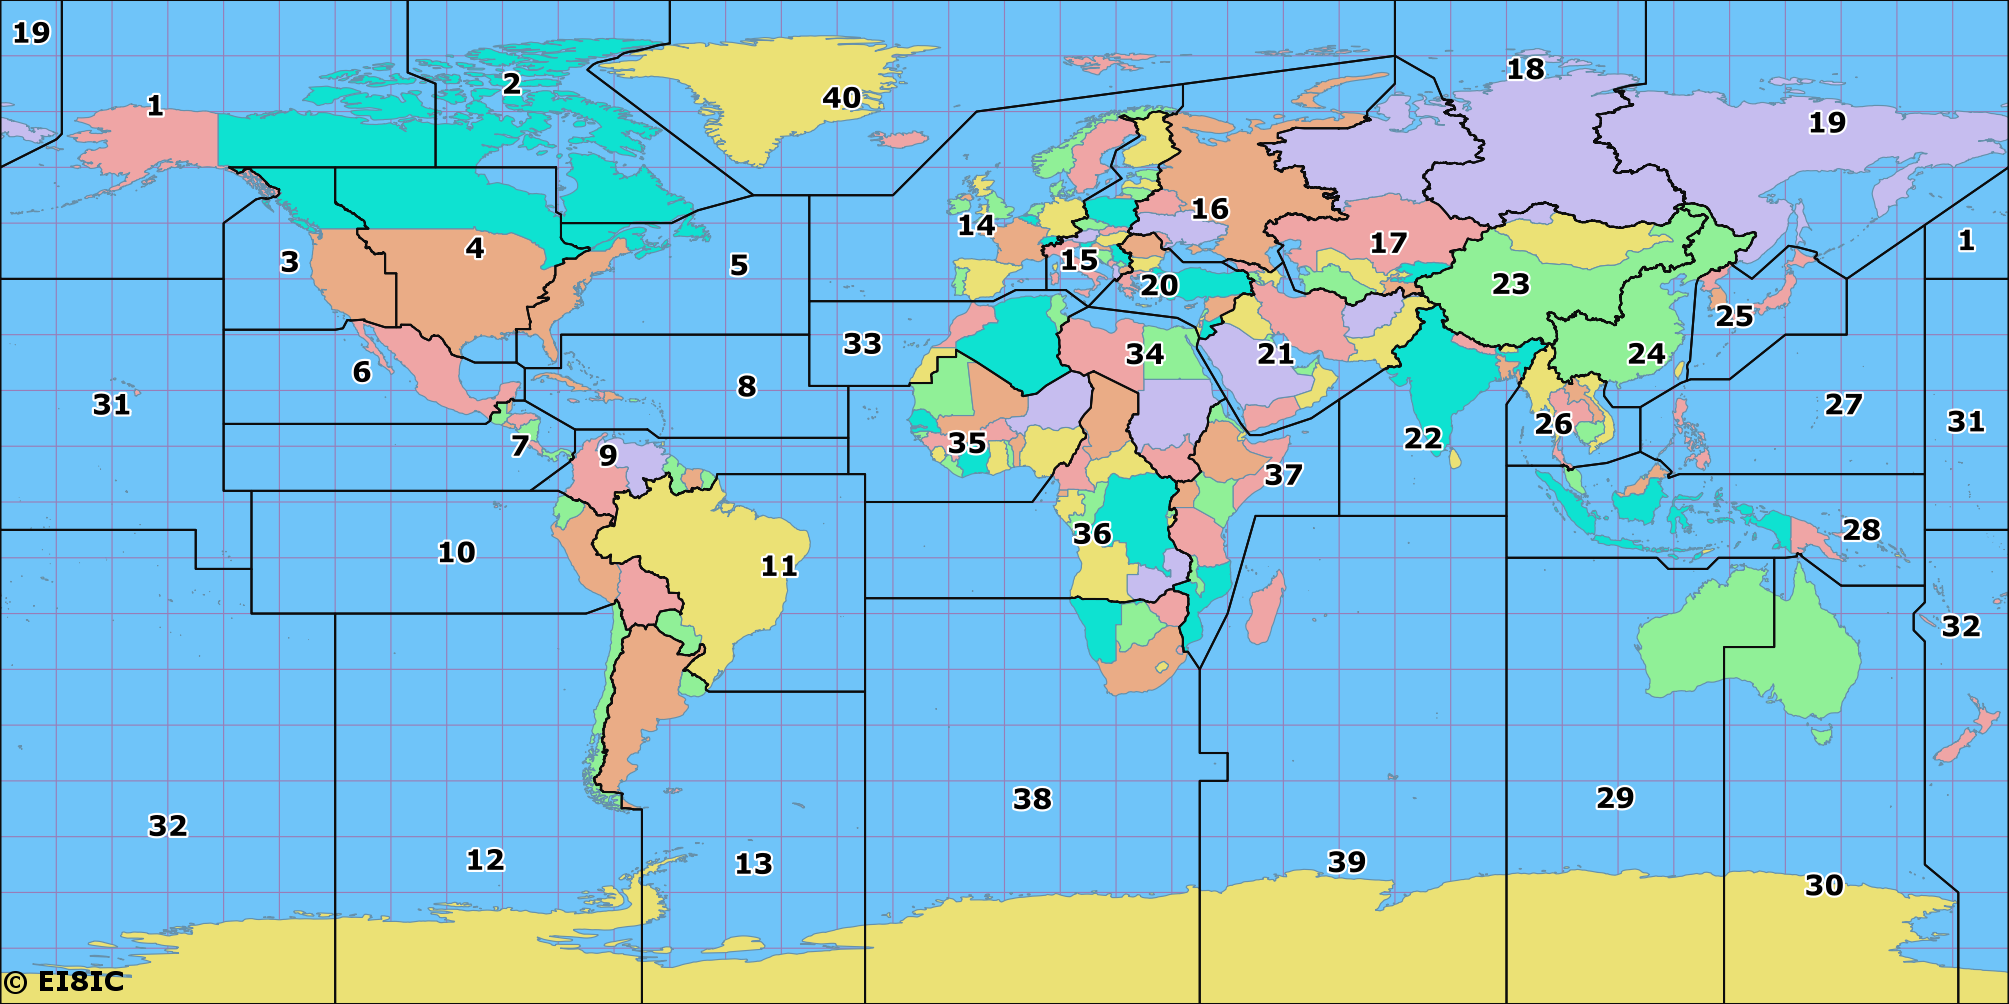 CQ Magazine zones map from https://www.mapability.com/ei8ic/maps/cqzone.php